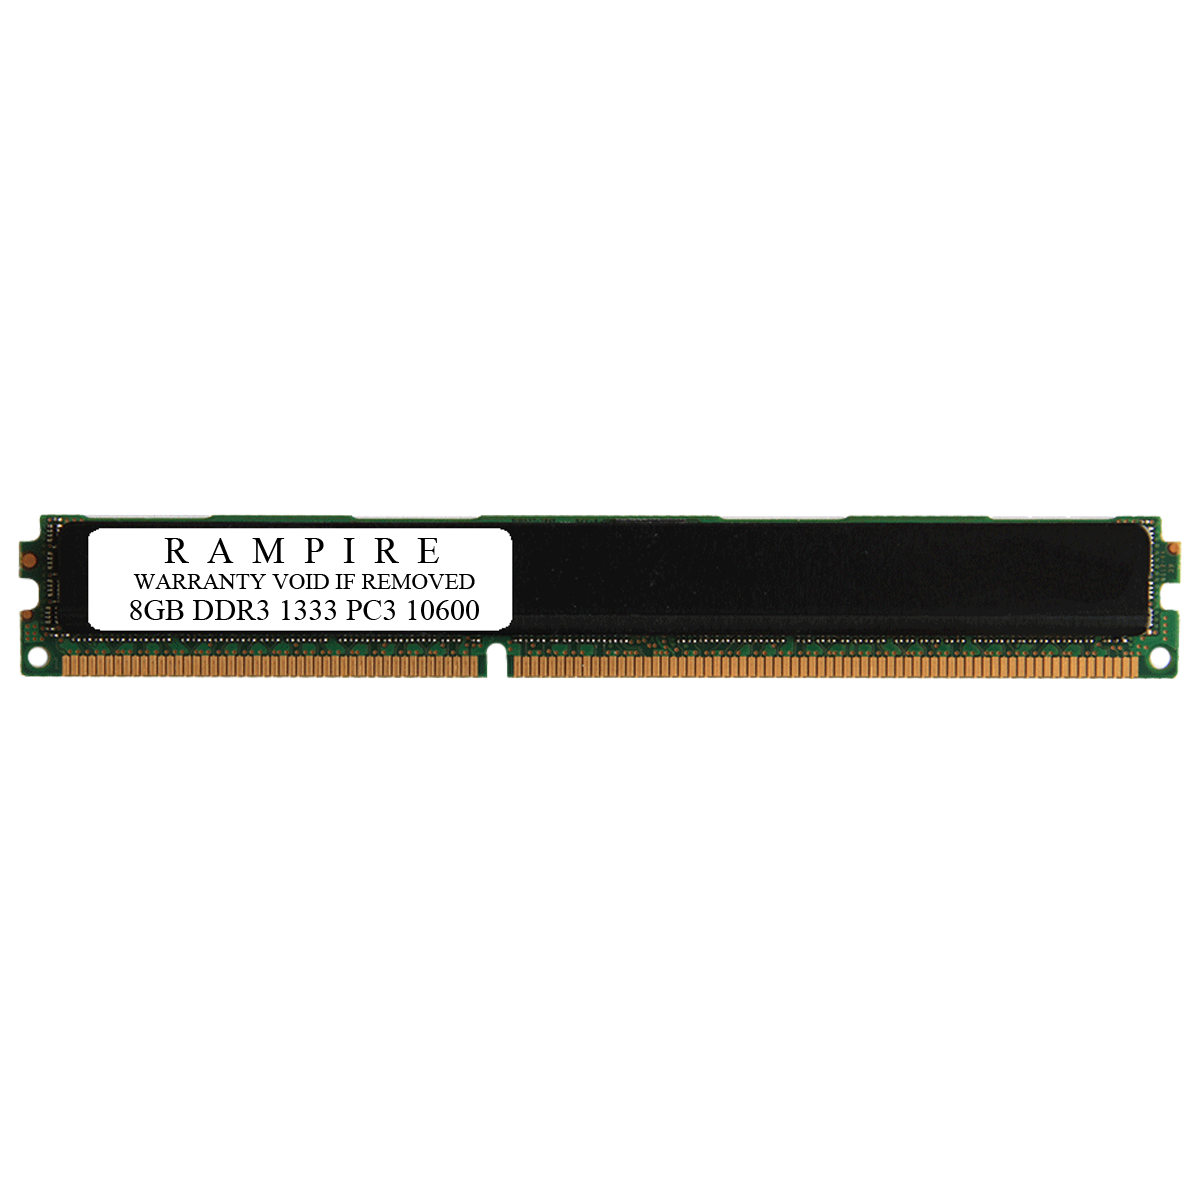 RAMPIRE 8GB DDR3 1333 (PC3 10600) 240-Pin SDRAM 2Rx8 VLP (Low Profile) 1.35V ECC Registered Server Memory